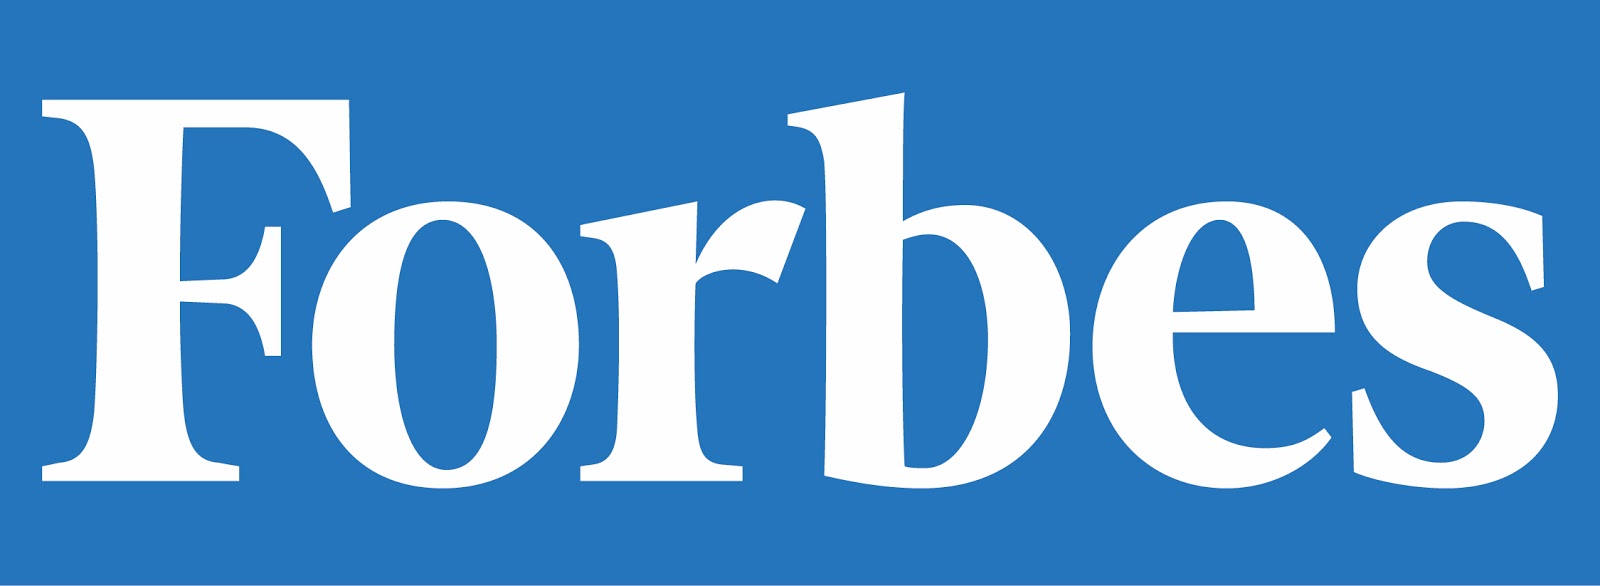 Forbes Logo image